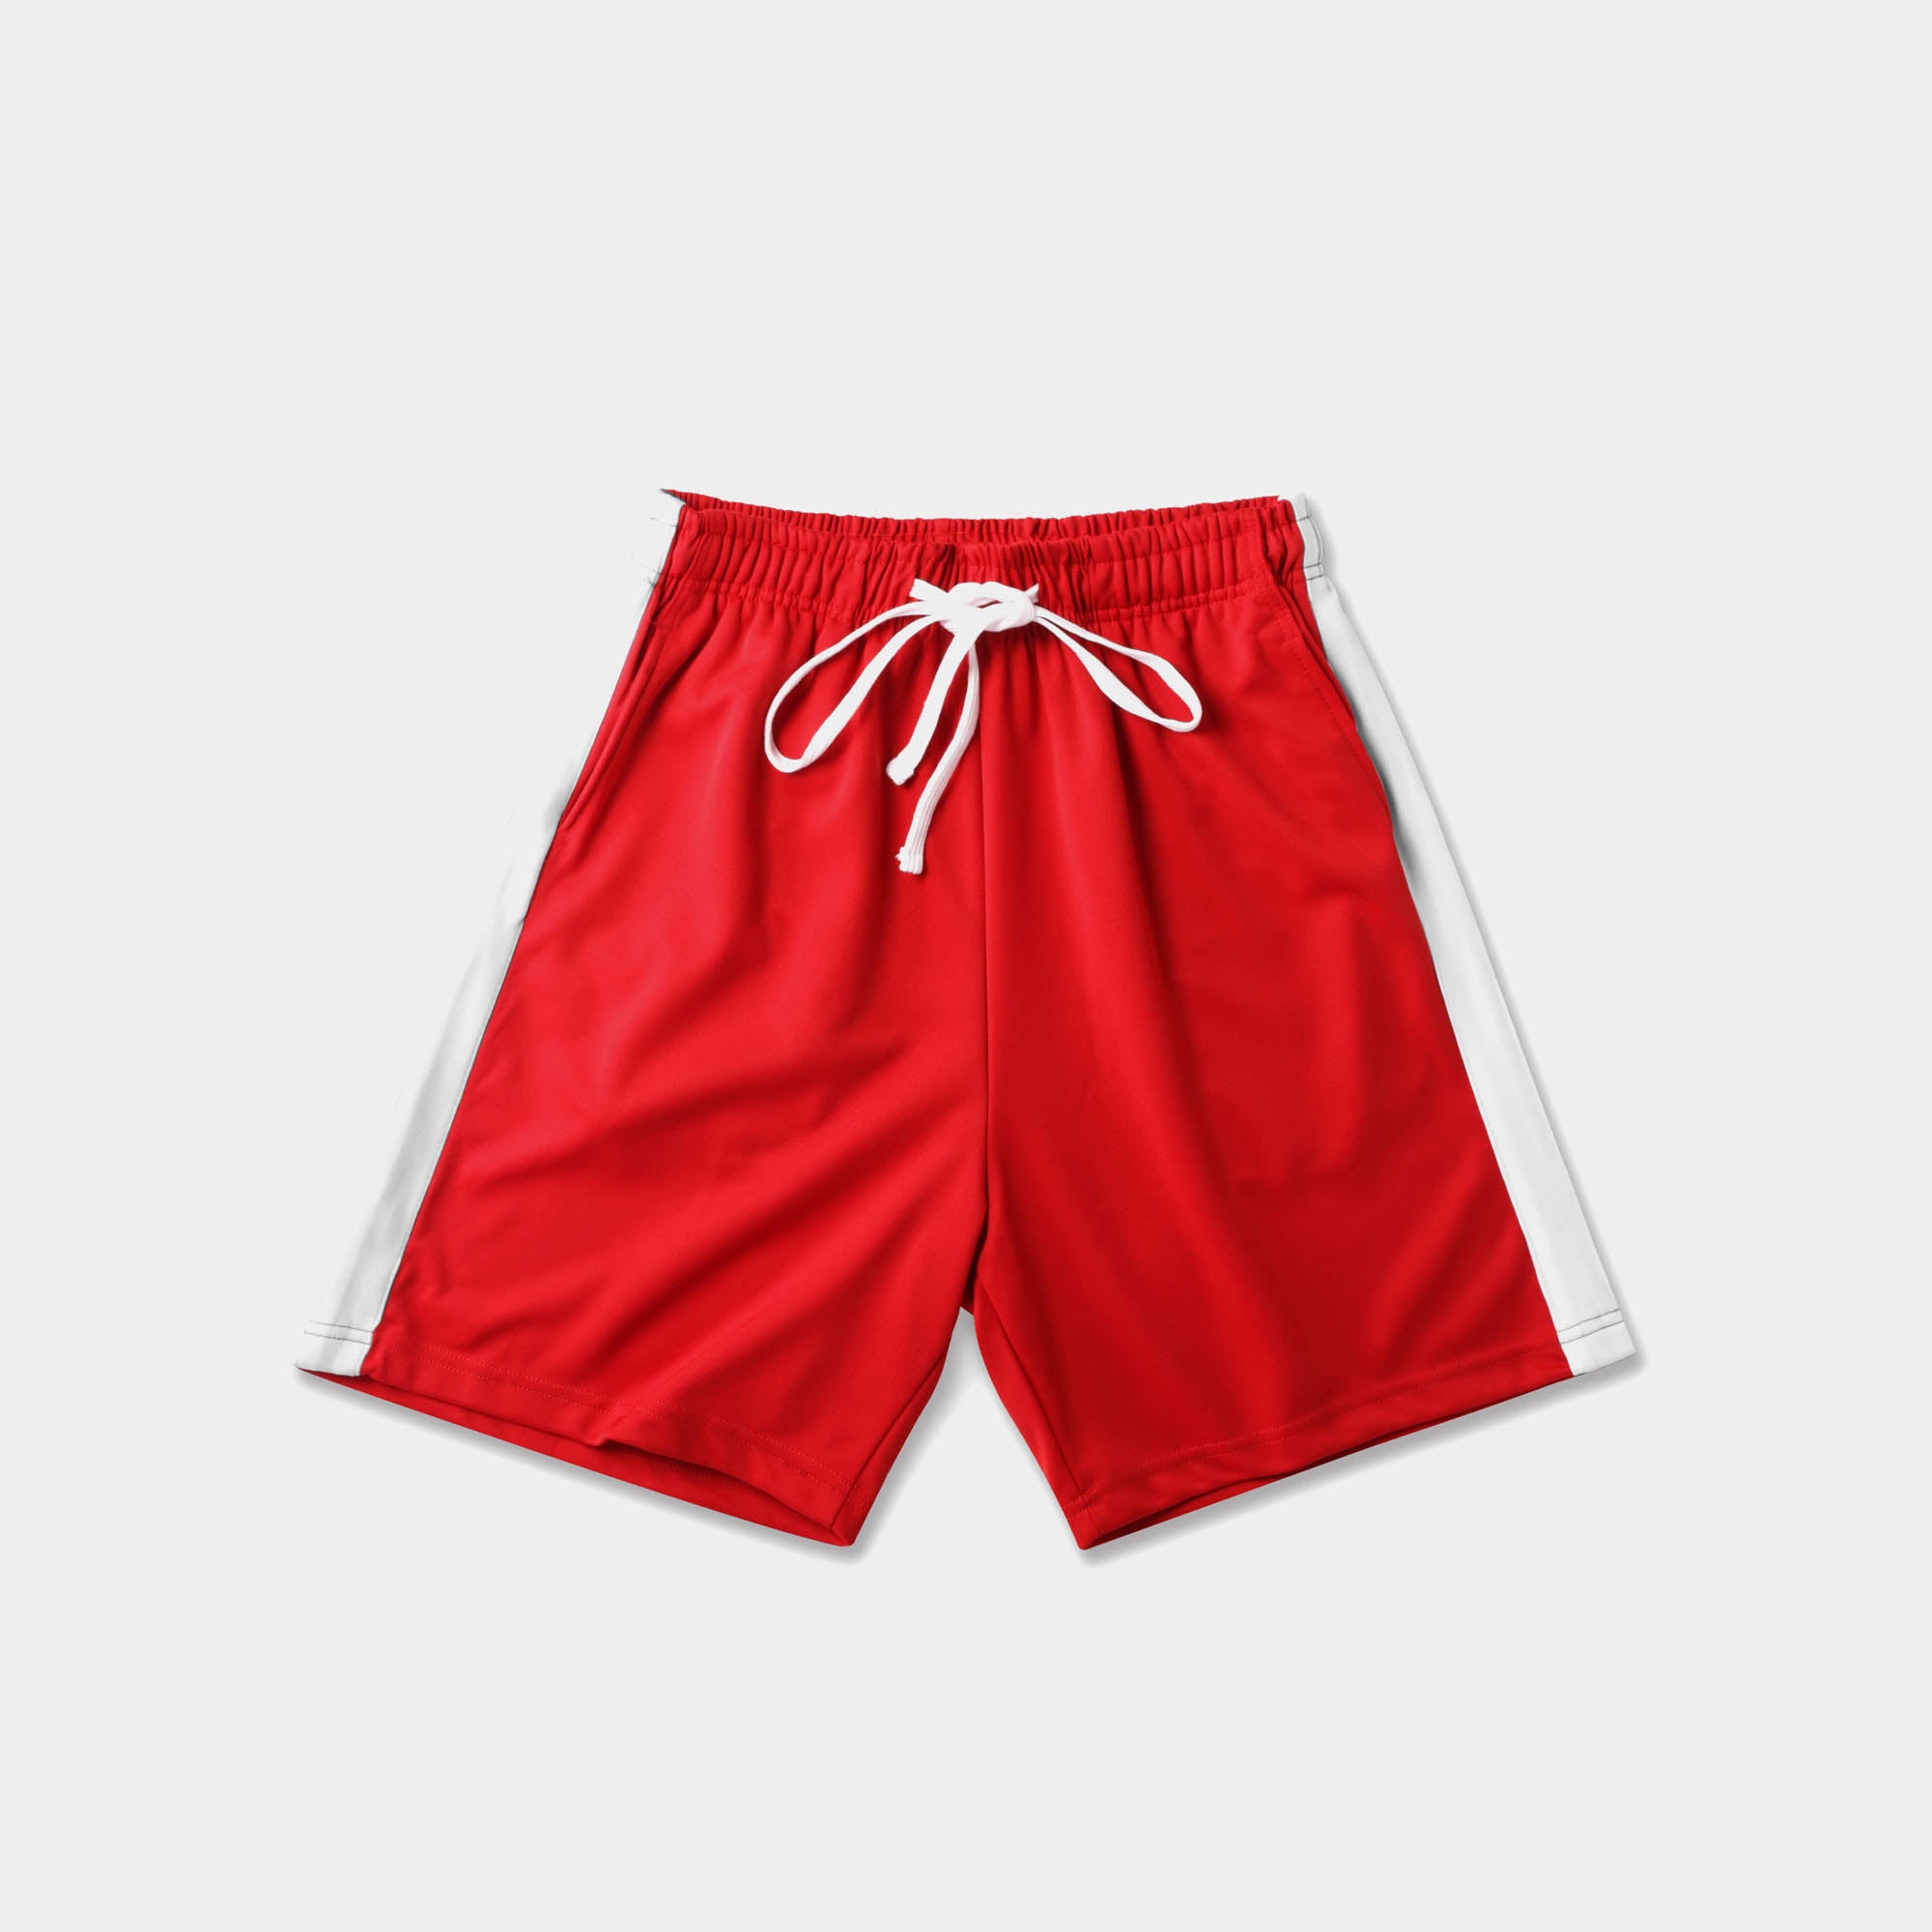 track shorts_track shorts mens_hind running shorts_boys track shorts_gucci shorts_gucci shorts mens_gucci shorts cheap_Red/White